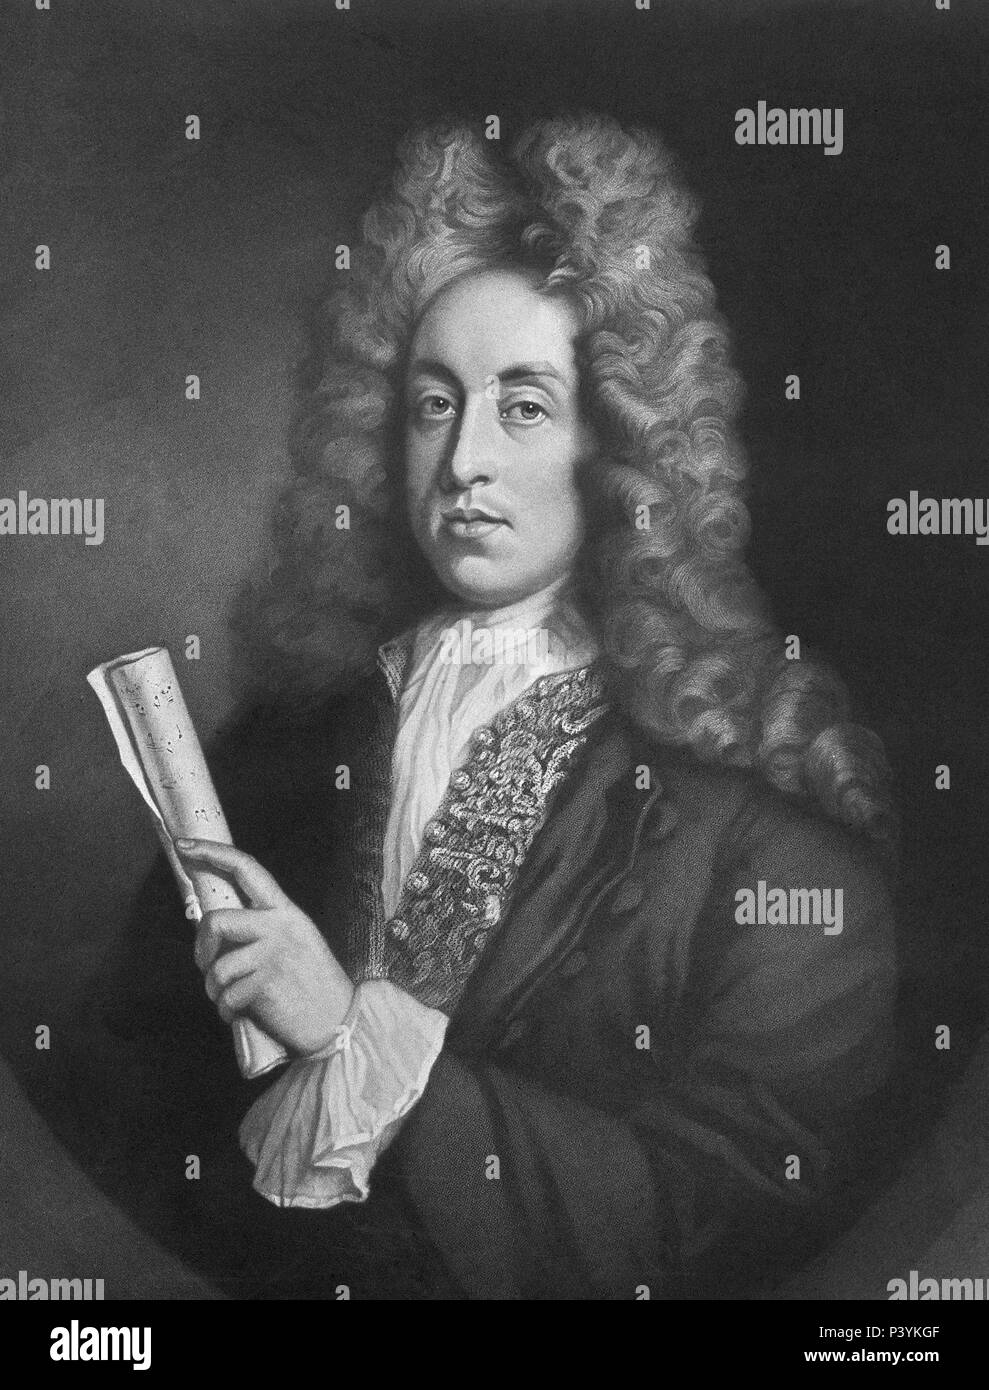 HENRY PURCELL (1659-1695) - COMPOSITOR BRITANICO DEL BARROCO. Author: John Closterman (1660-1711). Location: BRITISH MUSEUM, LONDON, ENGLAND. Stock Photo